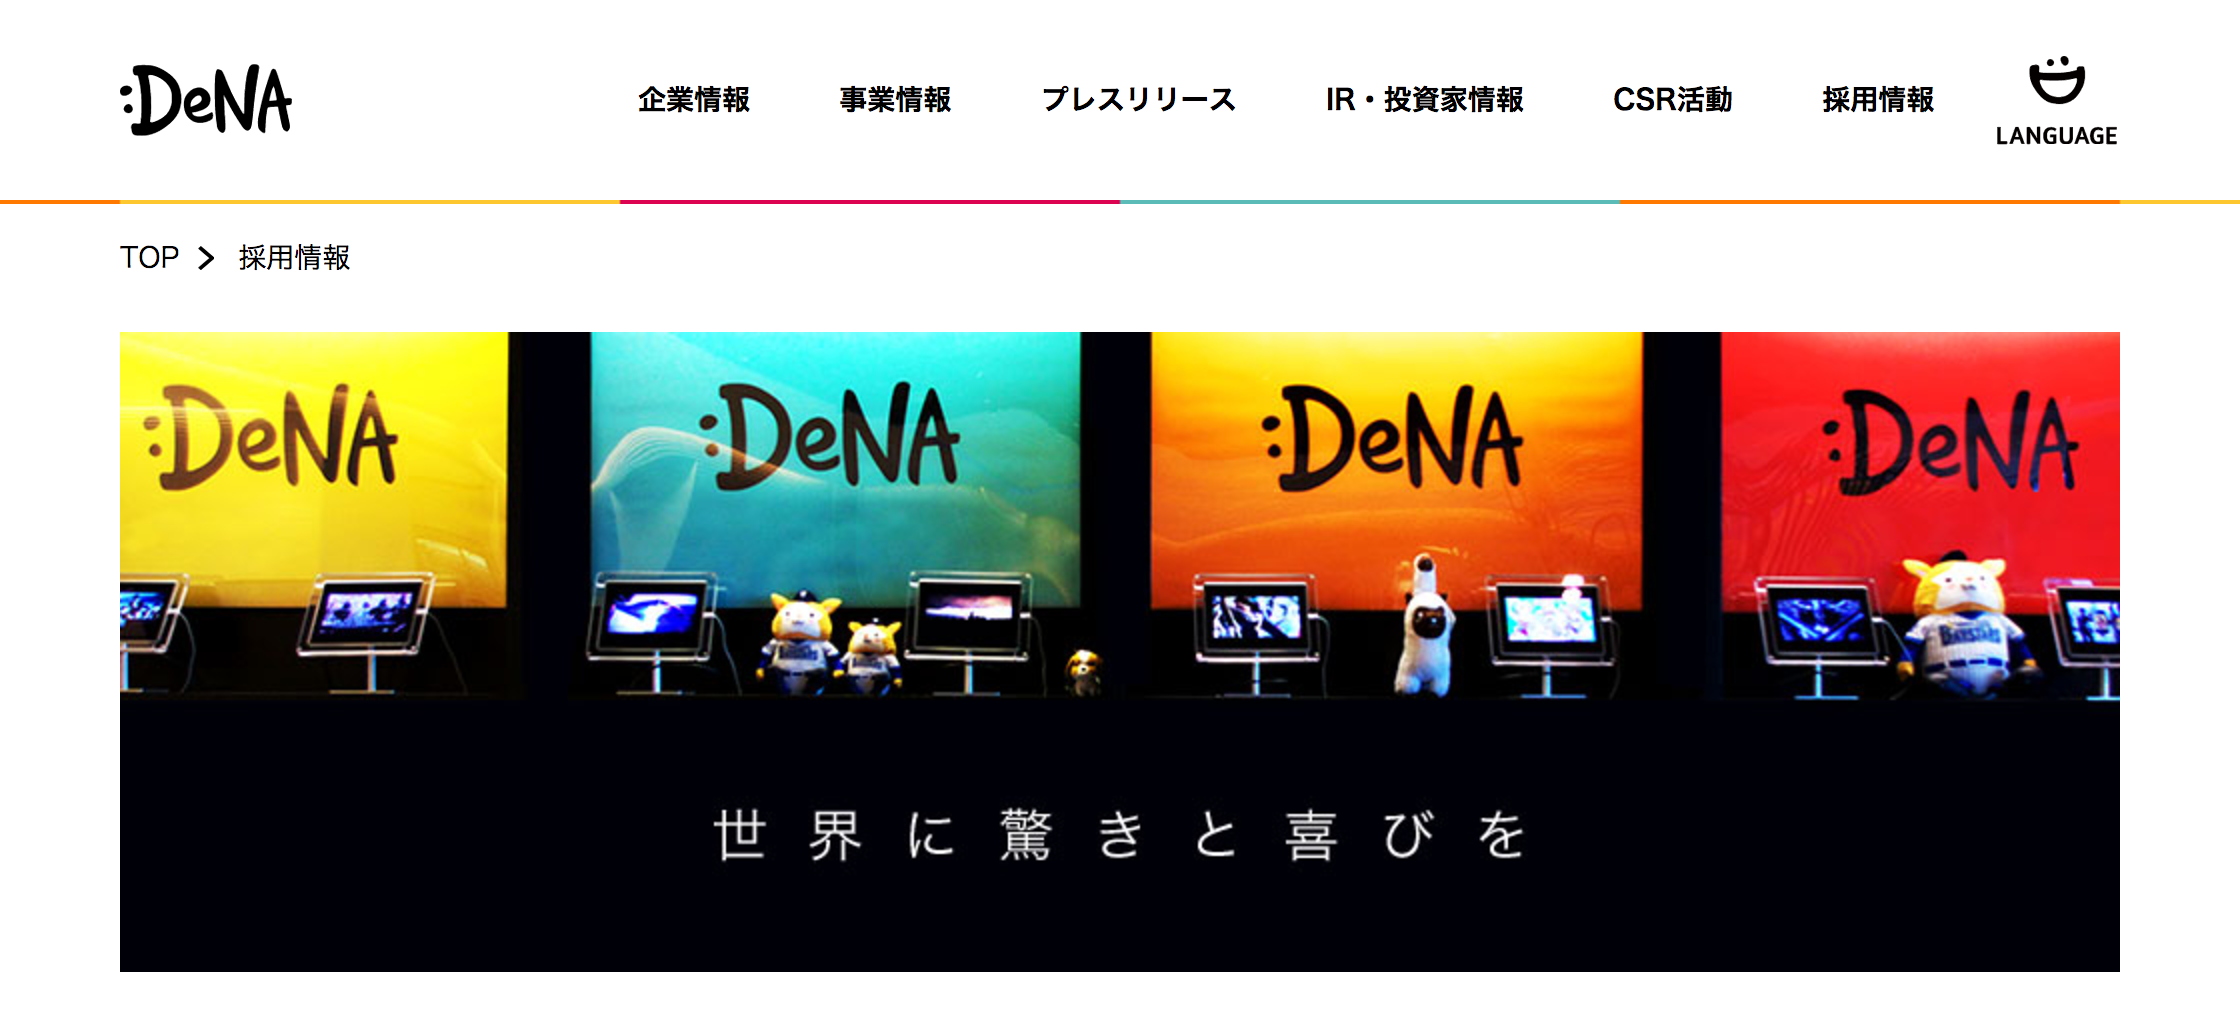 FireShot Capture 277 - 採用情報 I 株式会社ディー・エヌ・エー【DeNA】 - http___dena.com_jp_recruit_